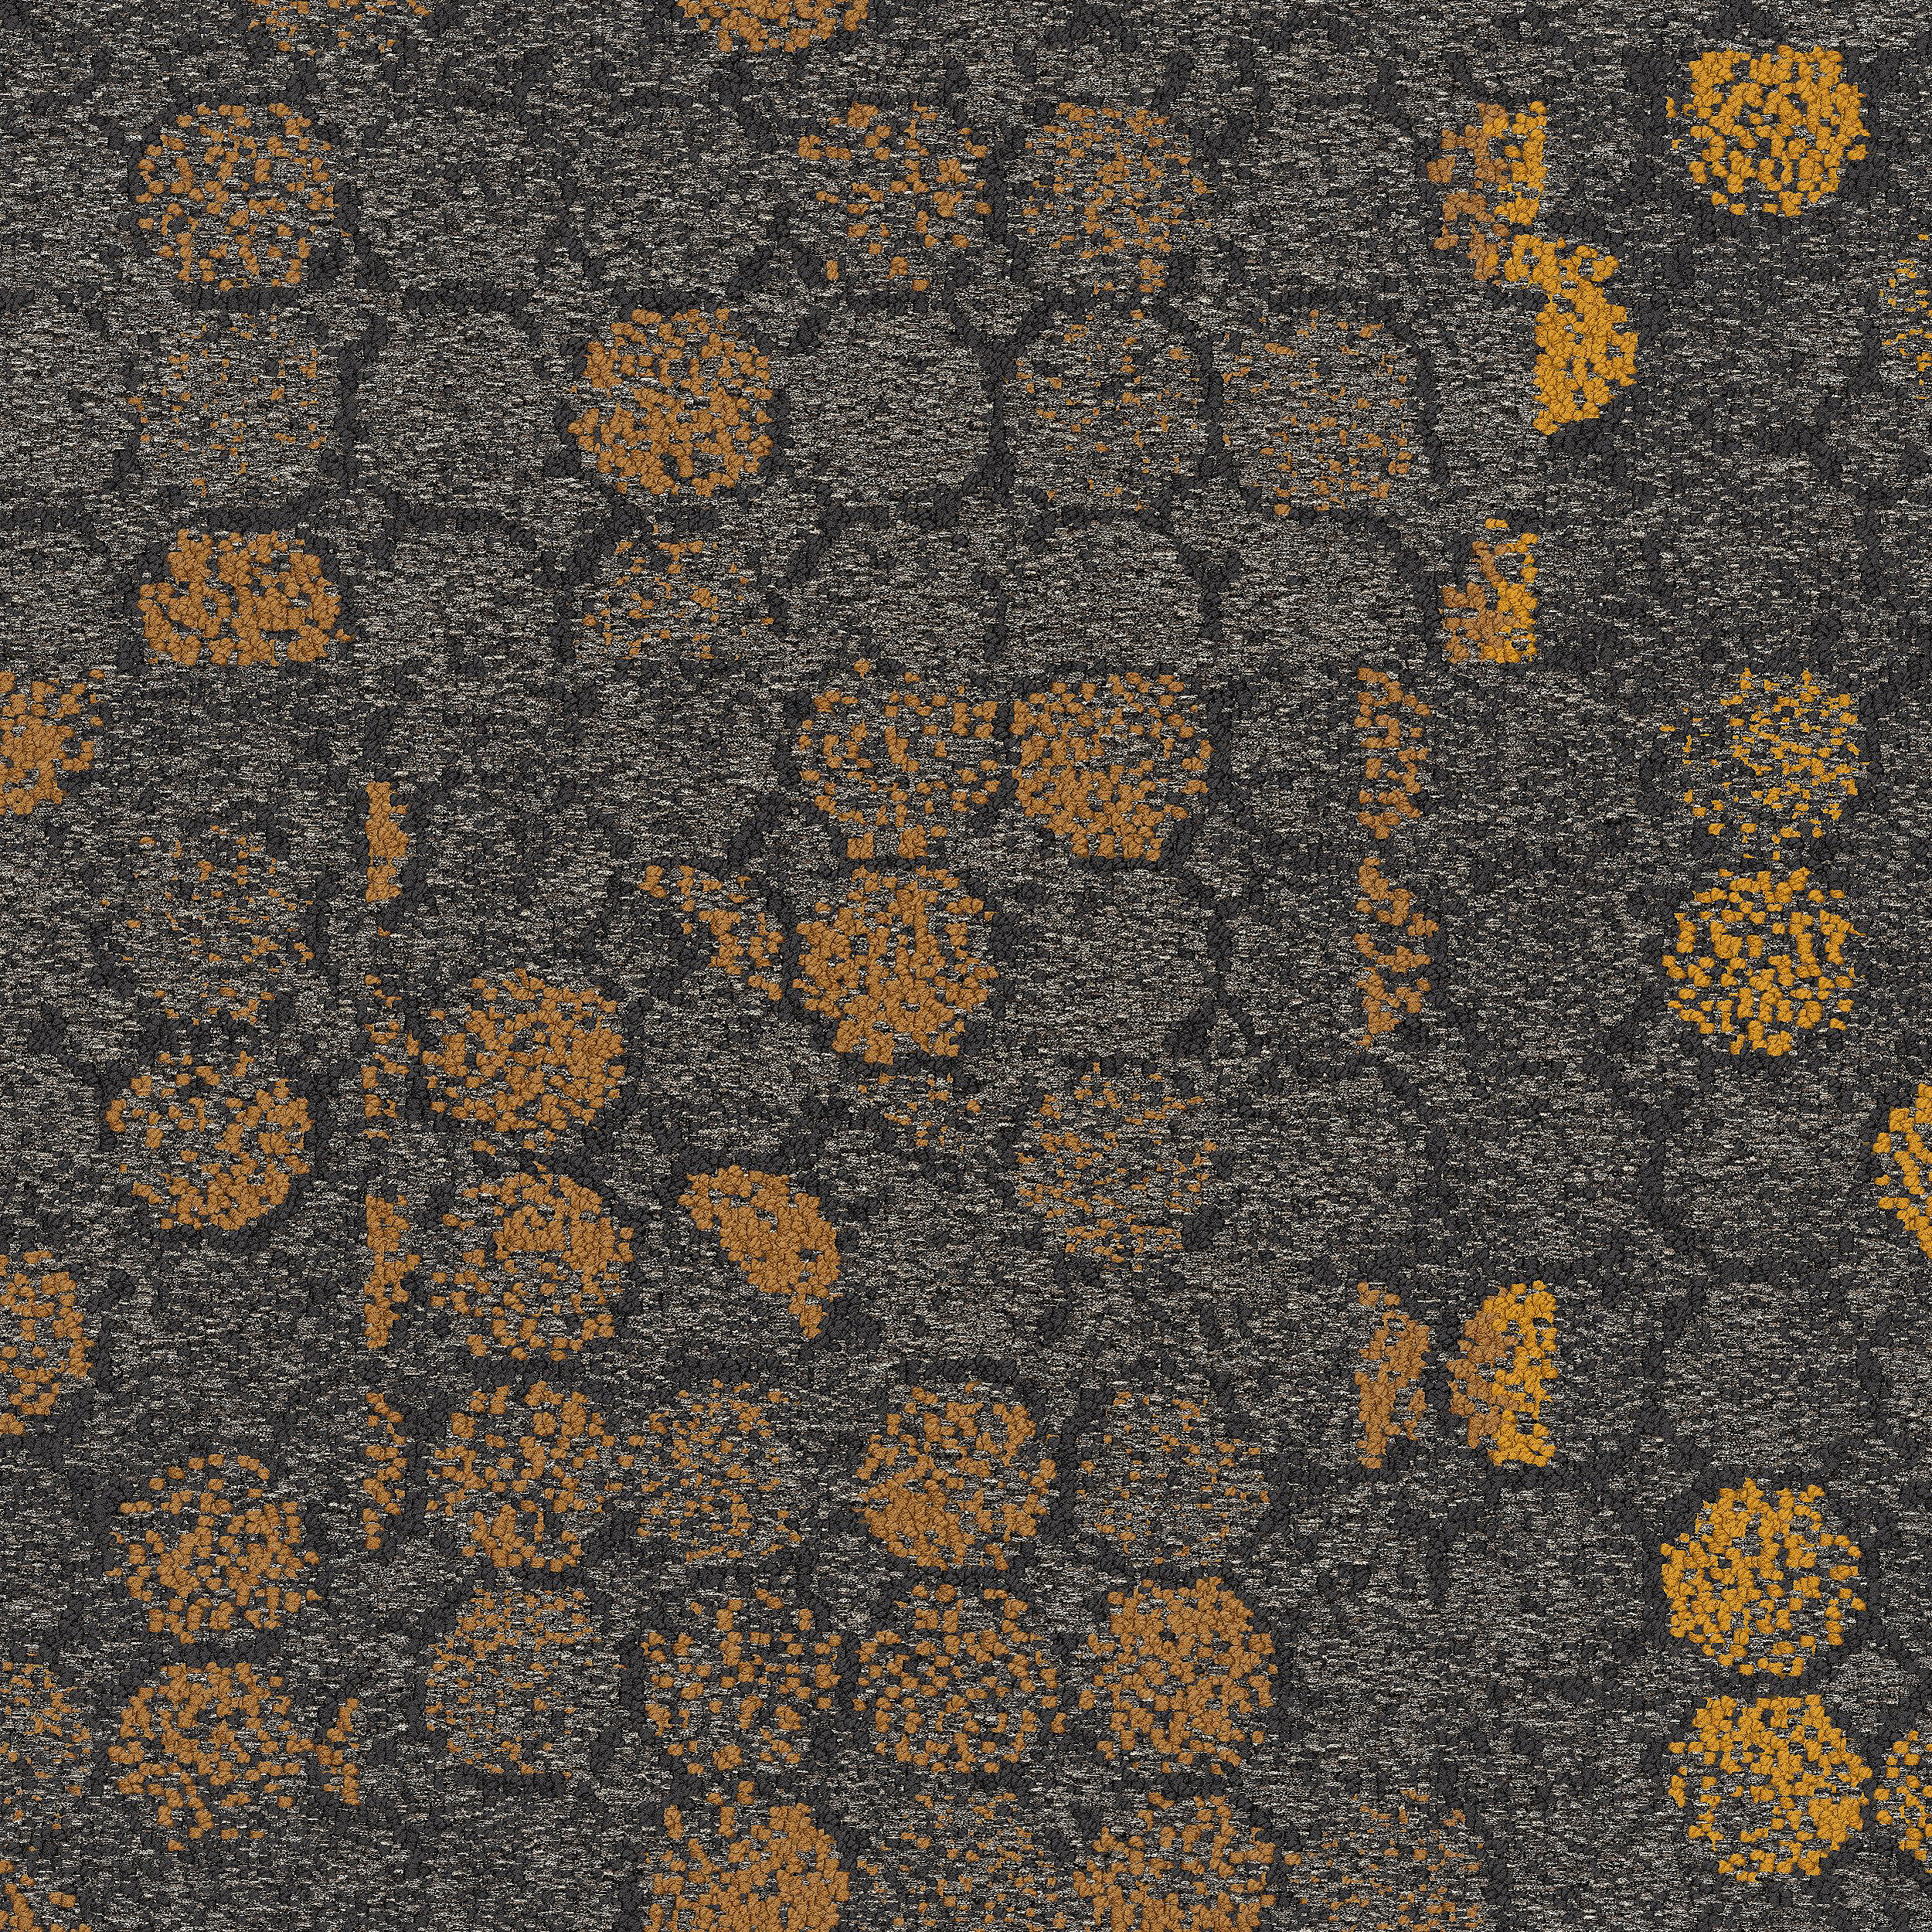 Broome Street Carpet Tile In Yellow Glass número de imagen 13